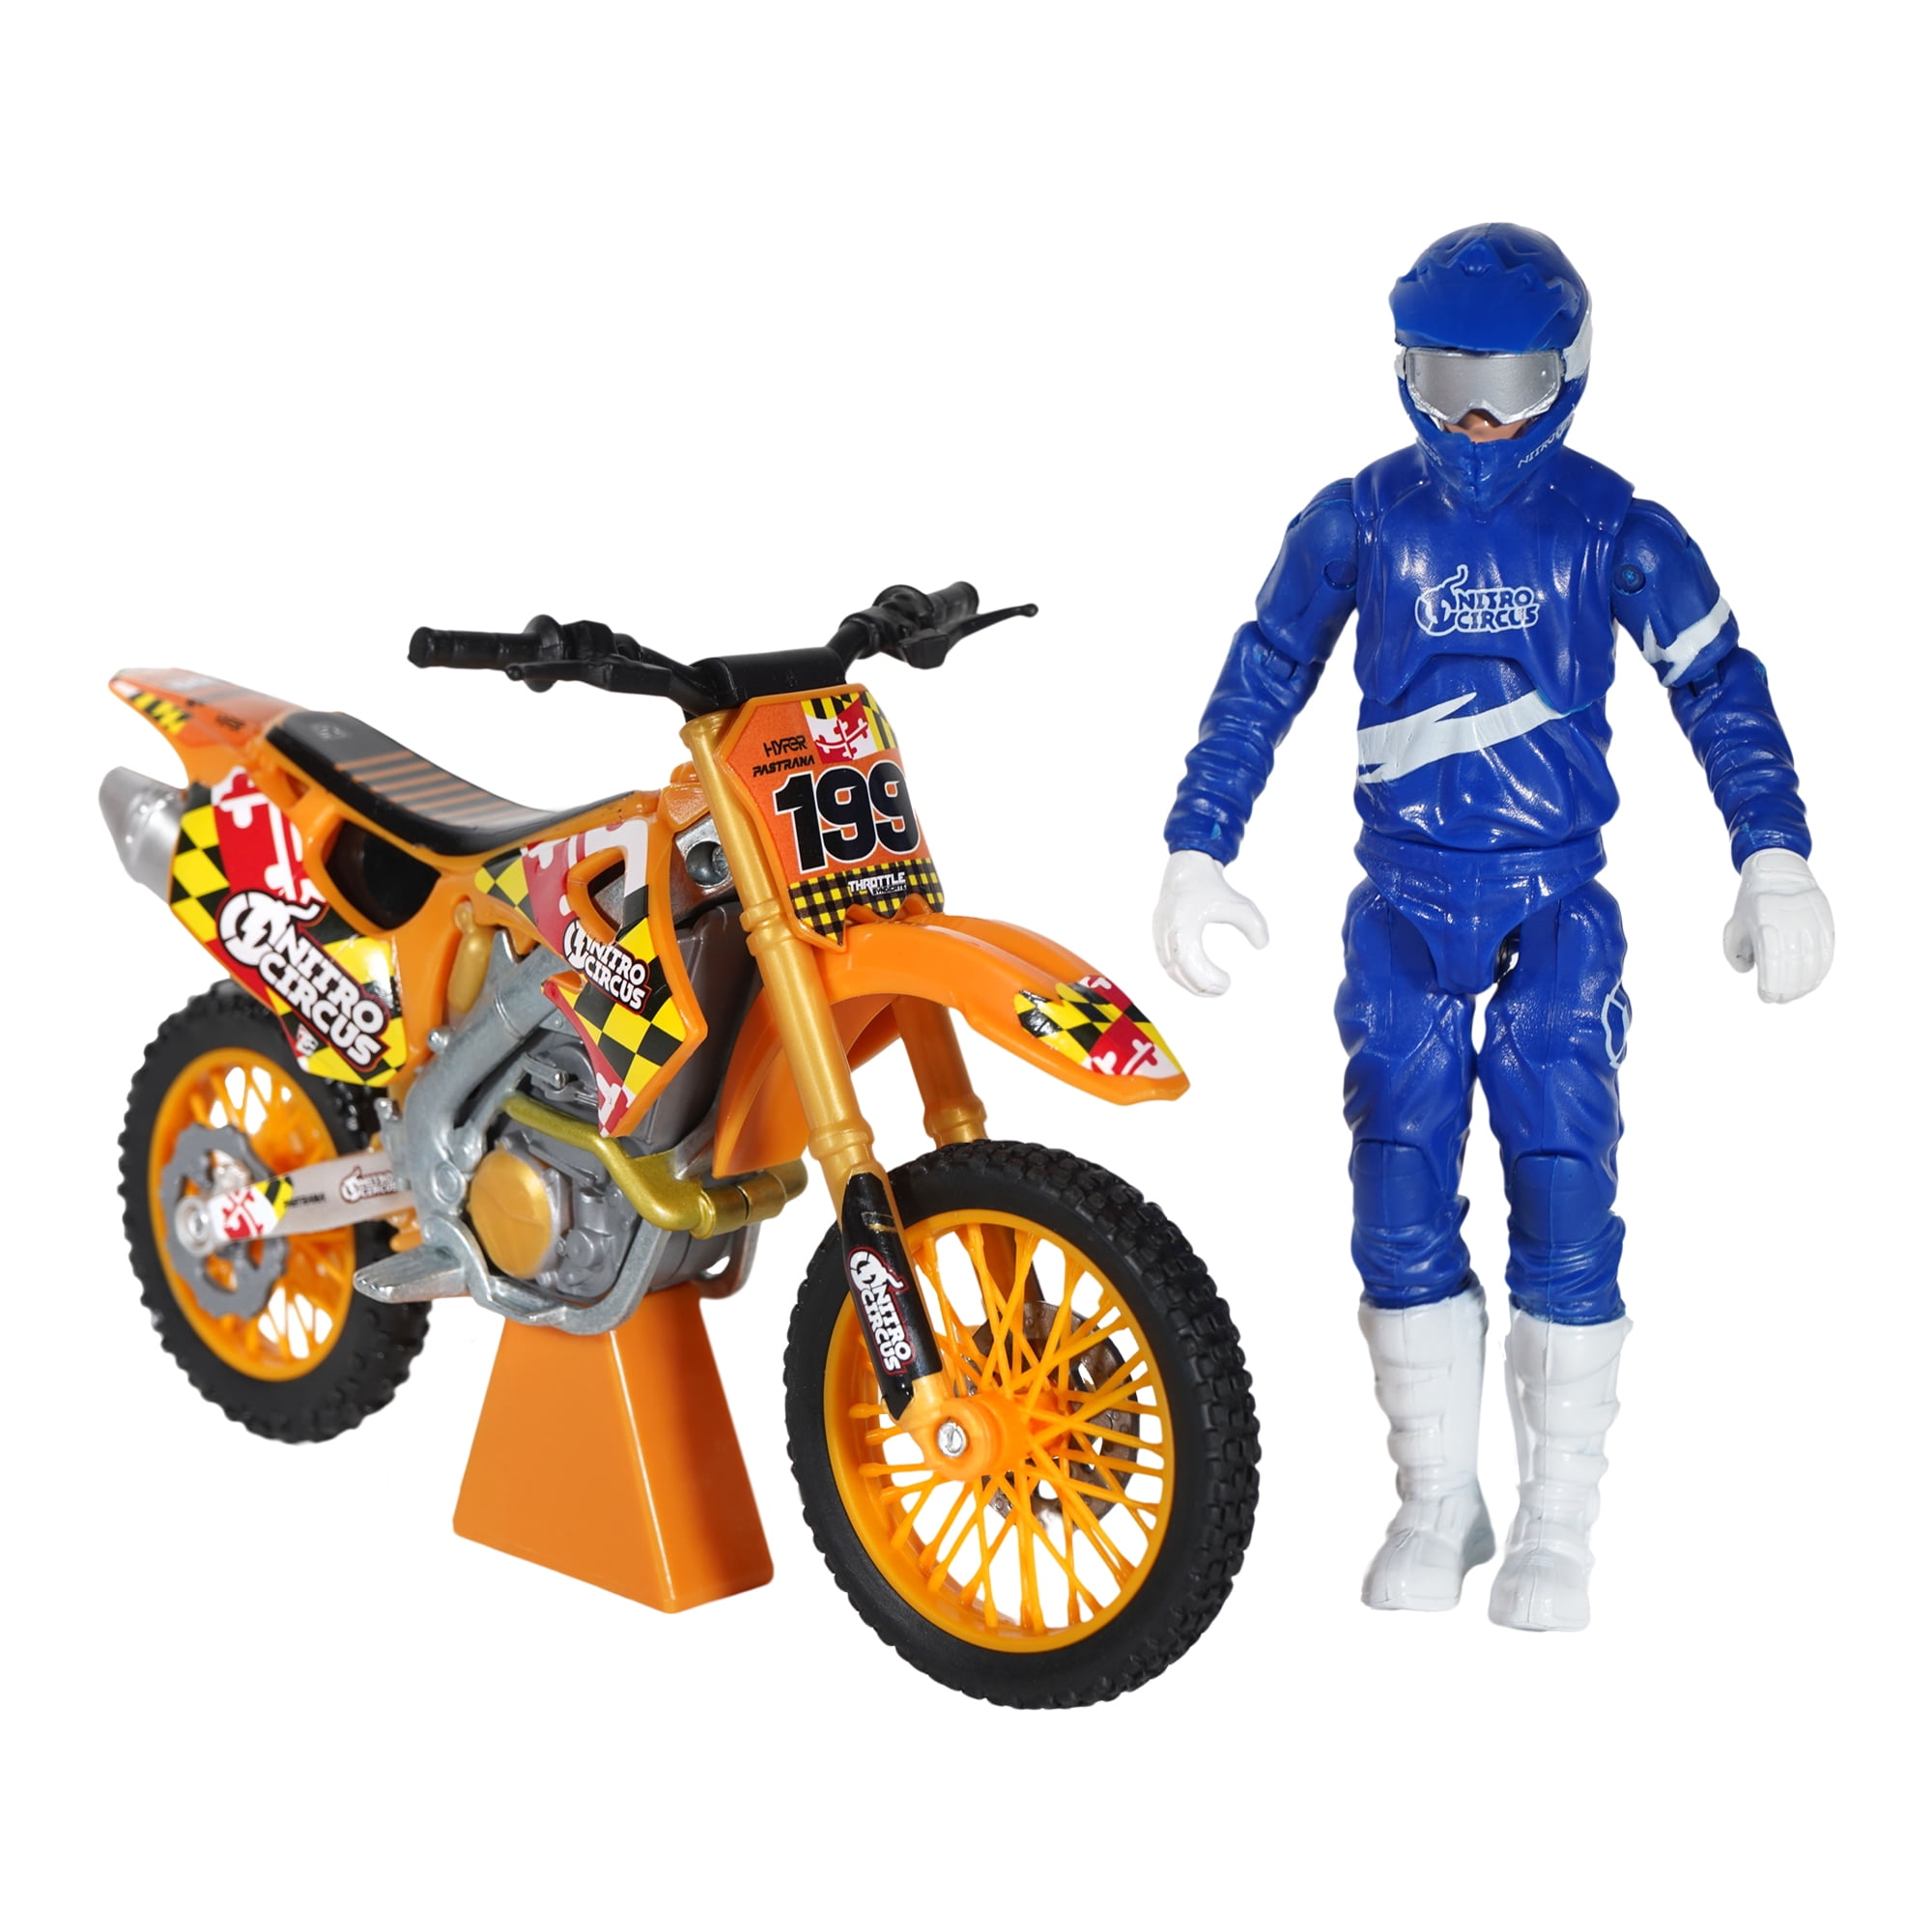 Kindermotorräder Galler - Dirtbike Nitro NXD 125 ccm 4 Takt Motor